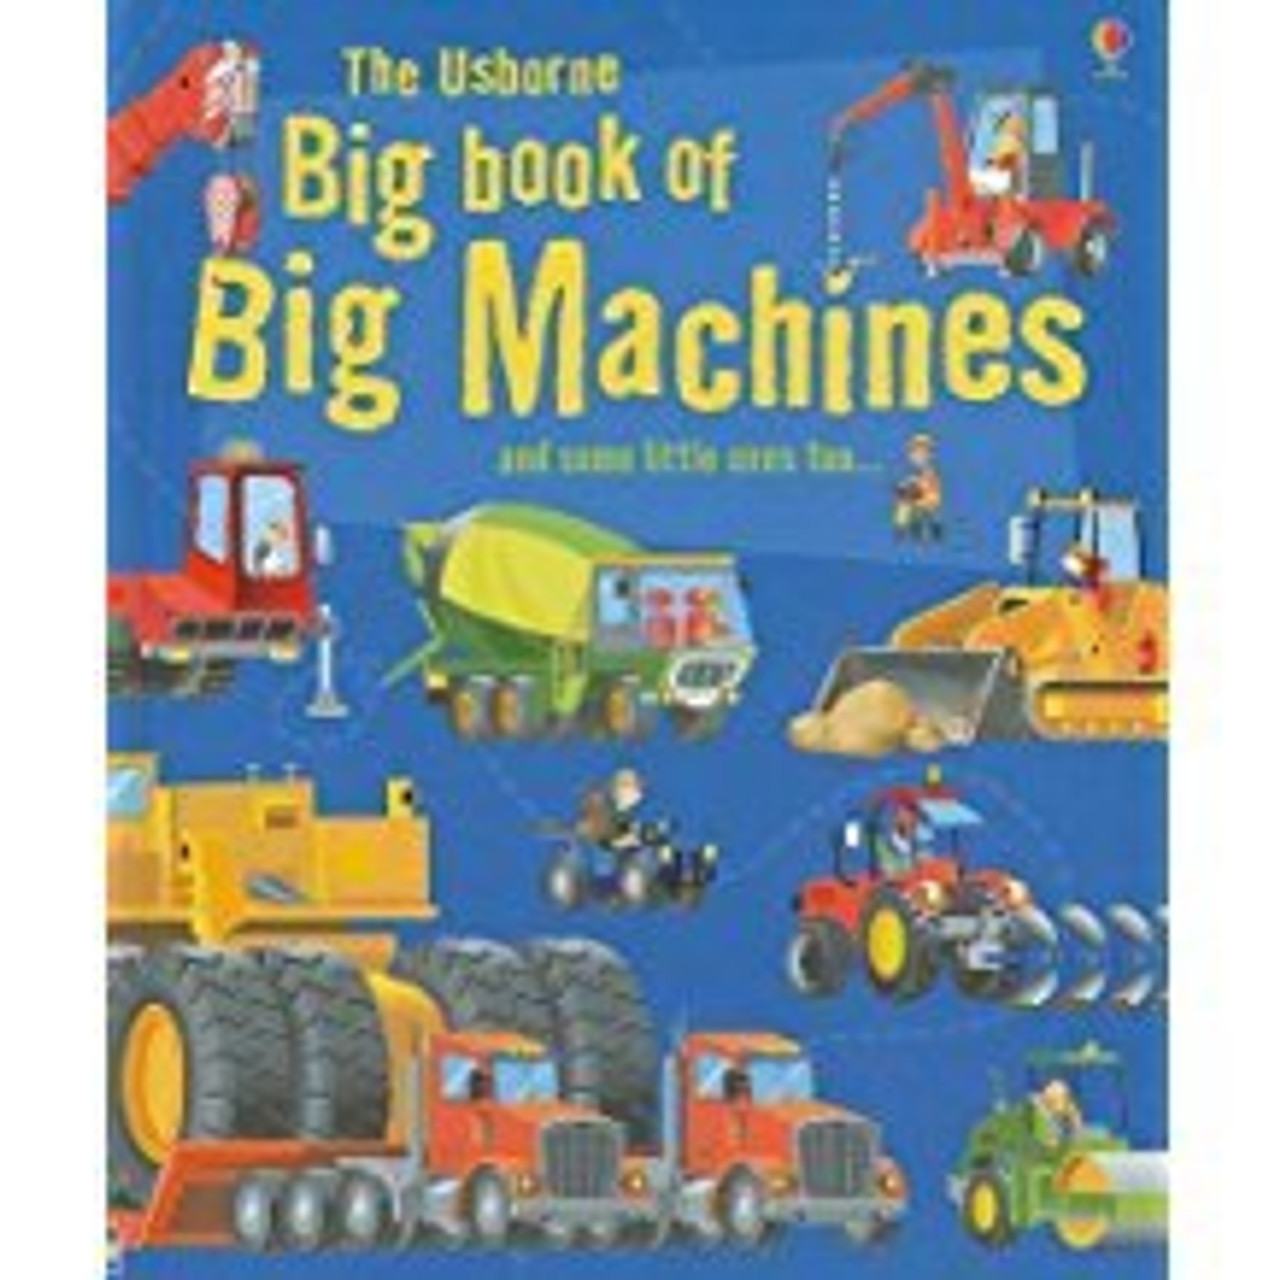 BIG BOOK OF BIG MACHINES (HB)